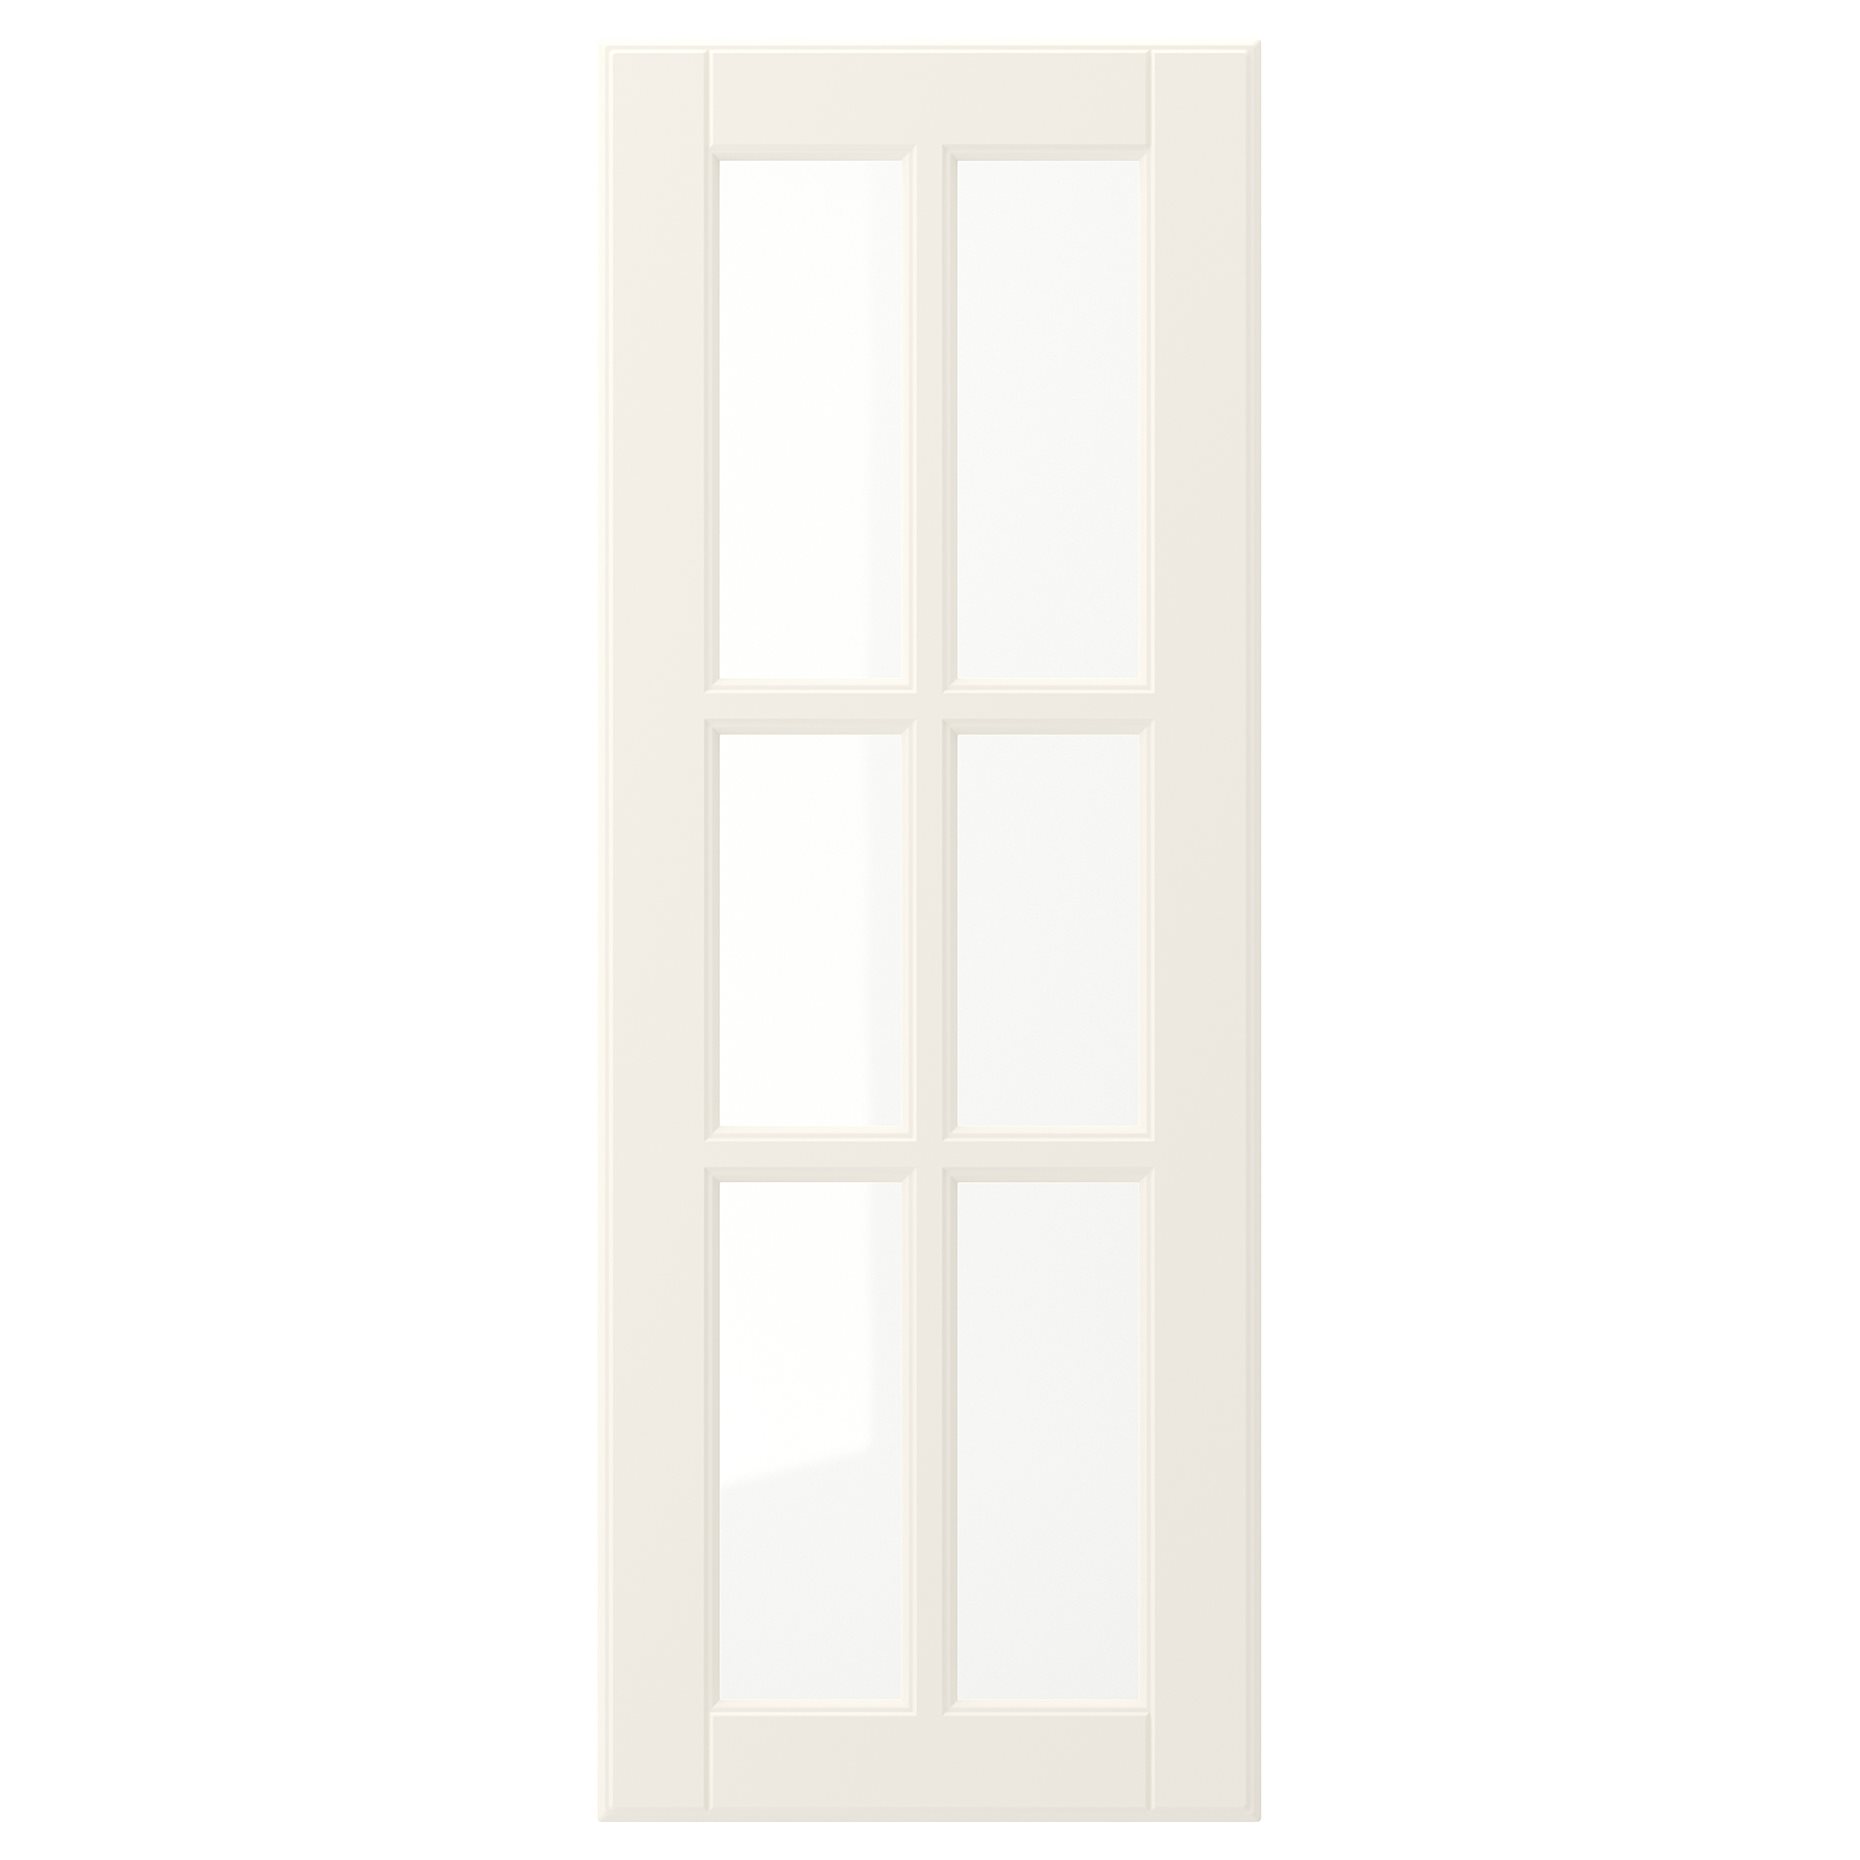 BODBYN, γυάλινη πόρτα, 30x80 cm, 604.850.37